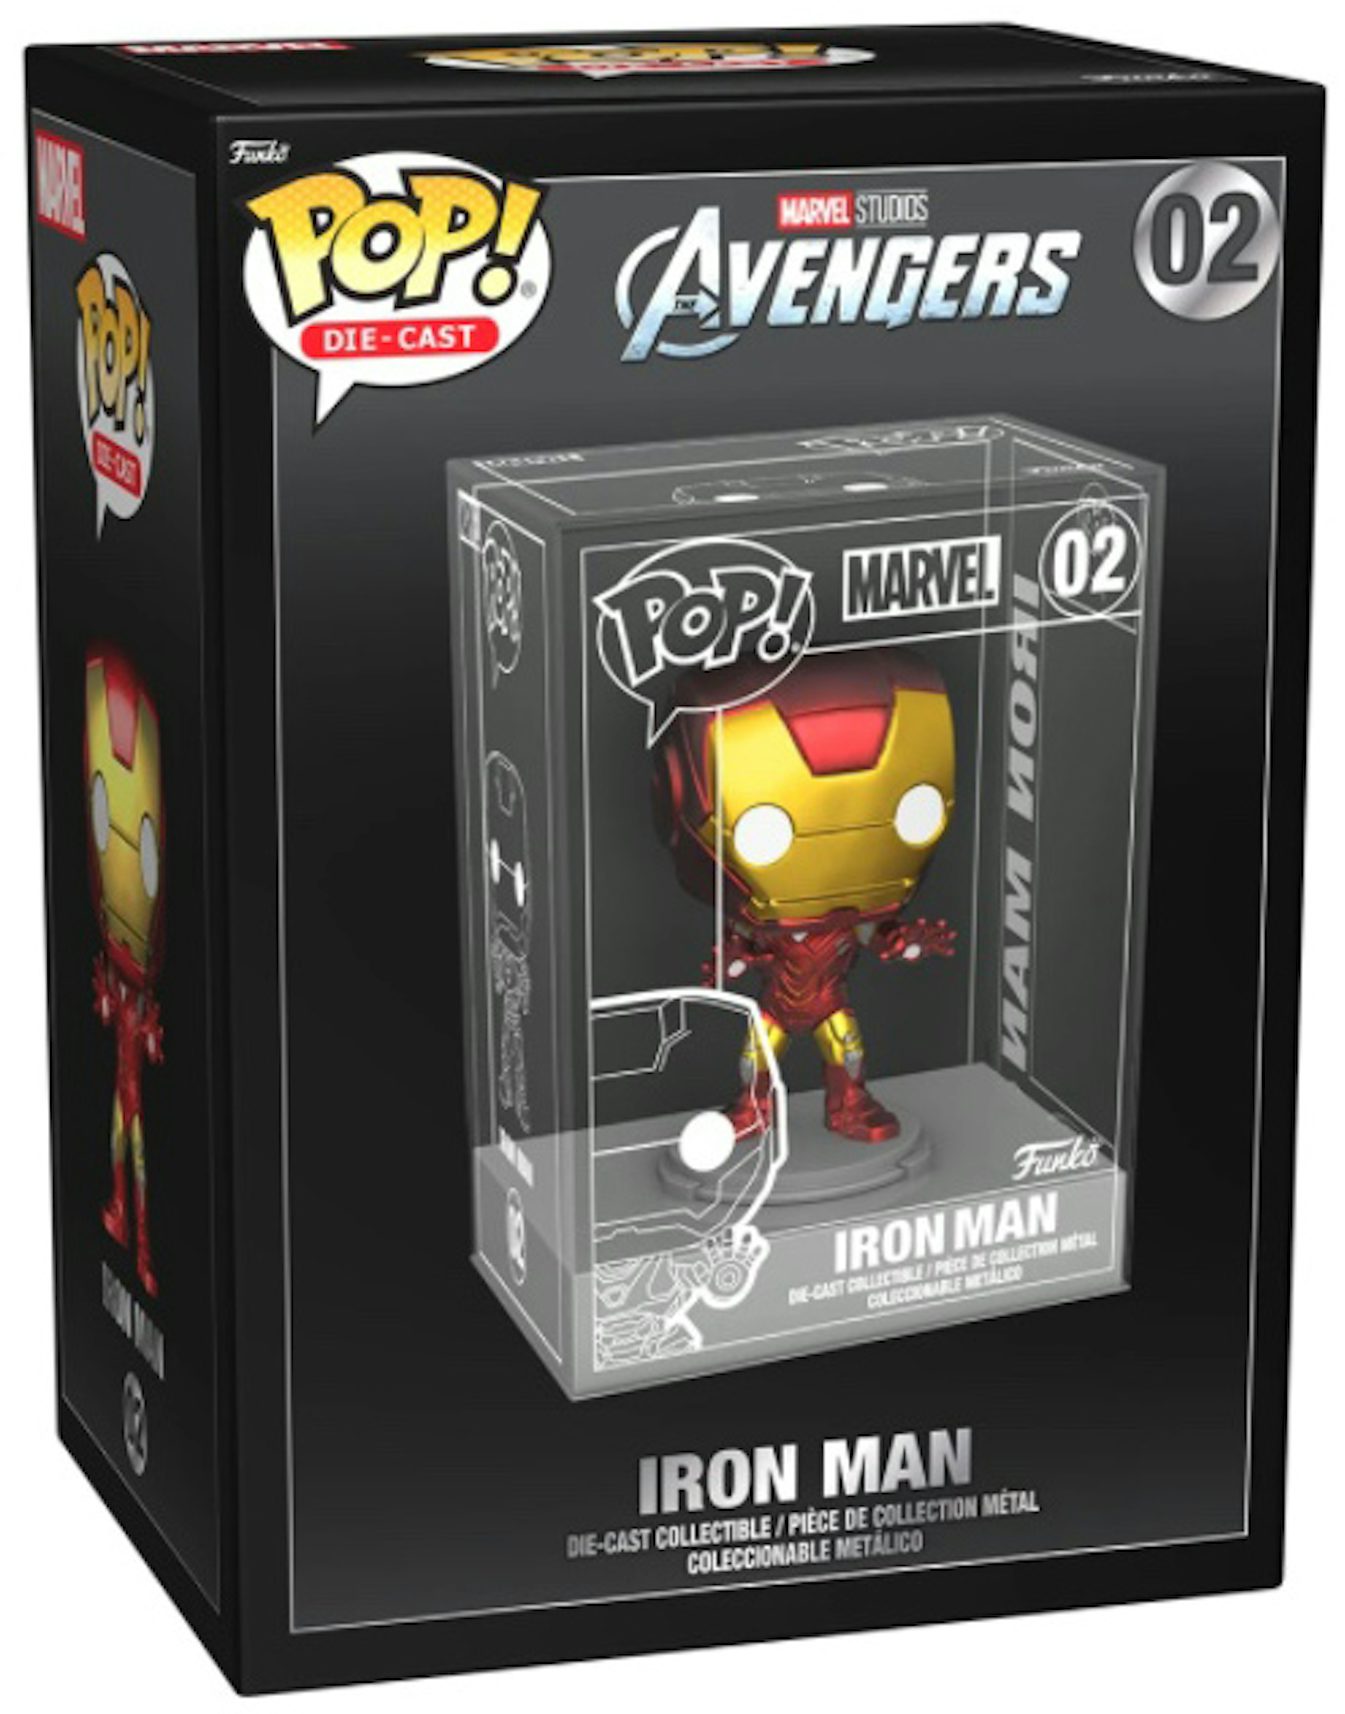 https://images.stockx.com/images/Funko-Pop-Die-Cast-Marvel-Studios-Avengers-Iron-Man-Figure-02.jpg?fit=fill&bg=FFFFFF&w=1200&h=857&fm=jpg&auto=compress&dpr=2&trim=color&updated_at=1636058901&q=60